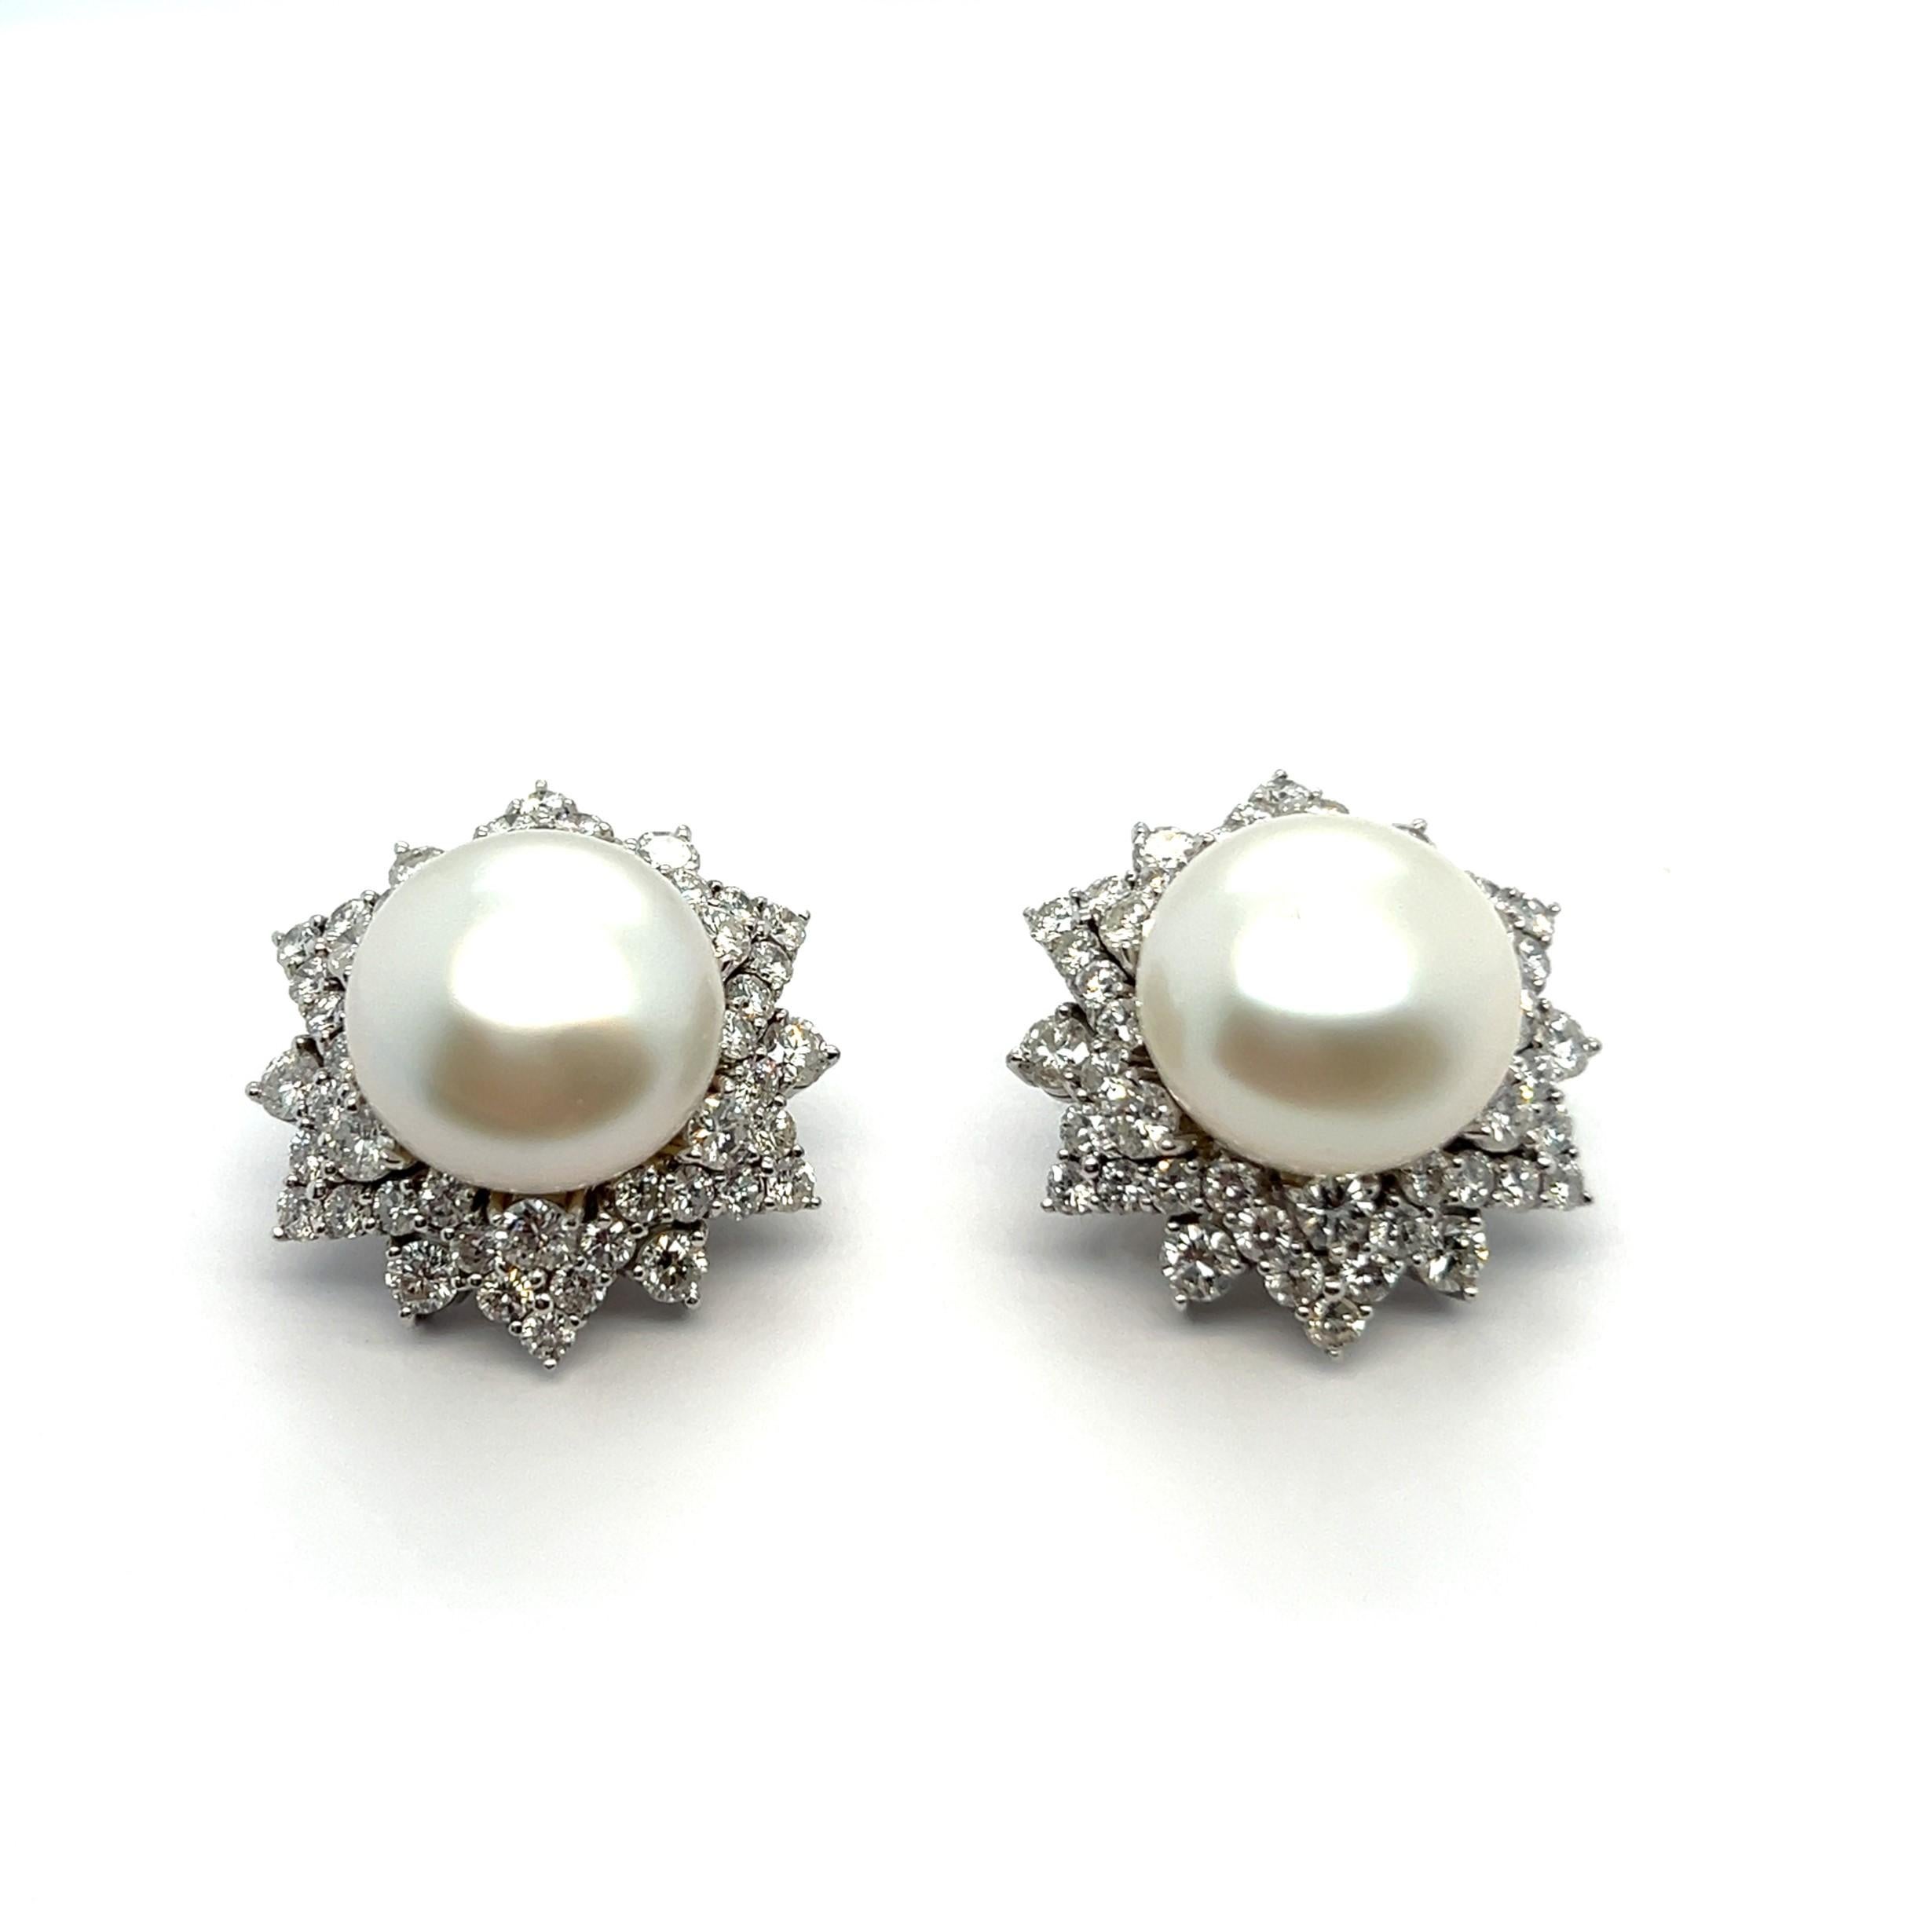 Modern South Sea Pearl Earrings in 18 Karat White Gold by Meister For Sale